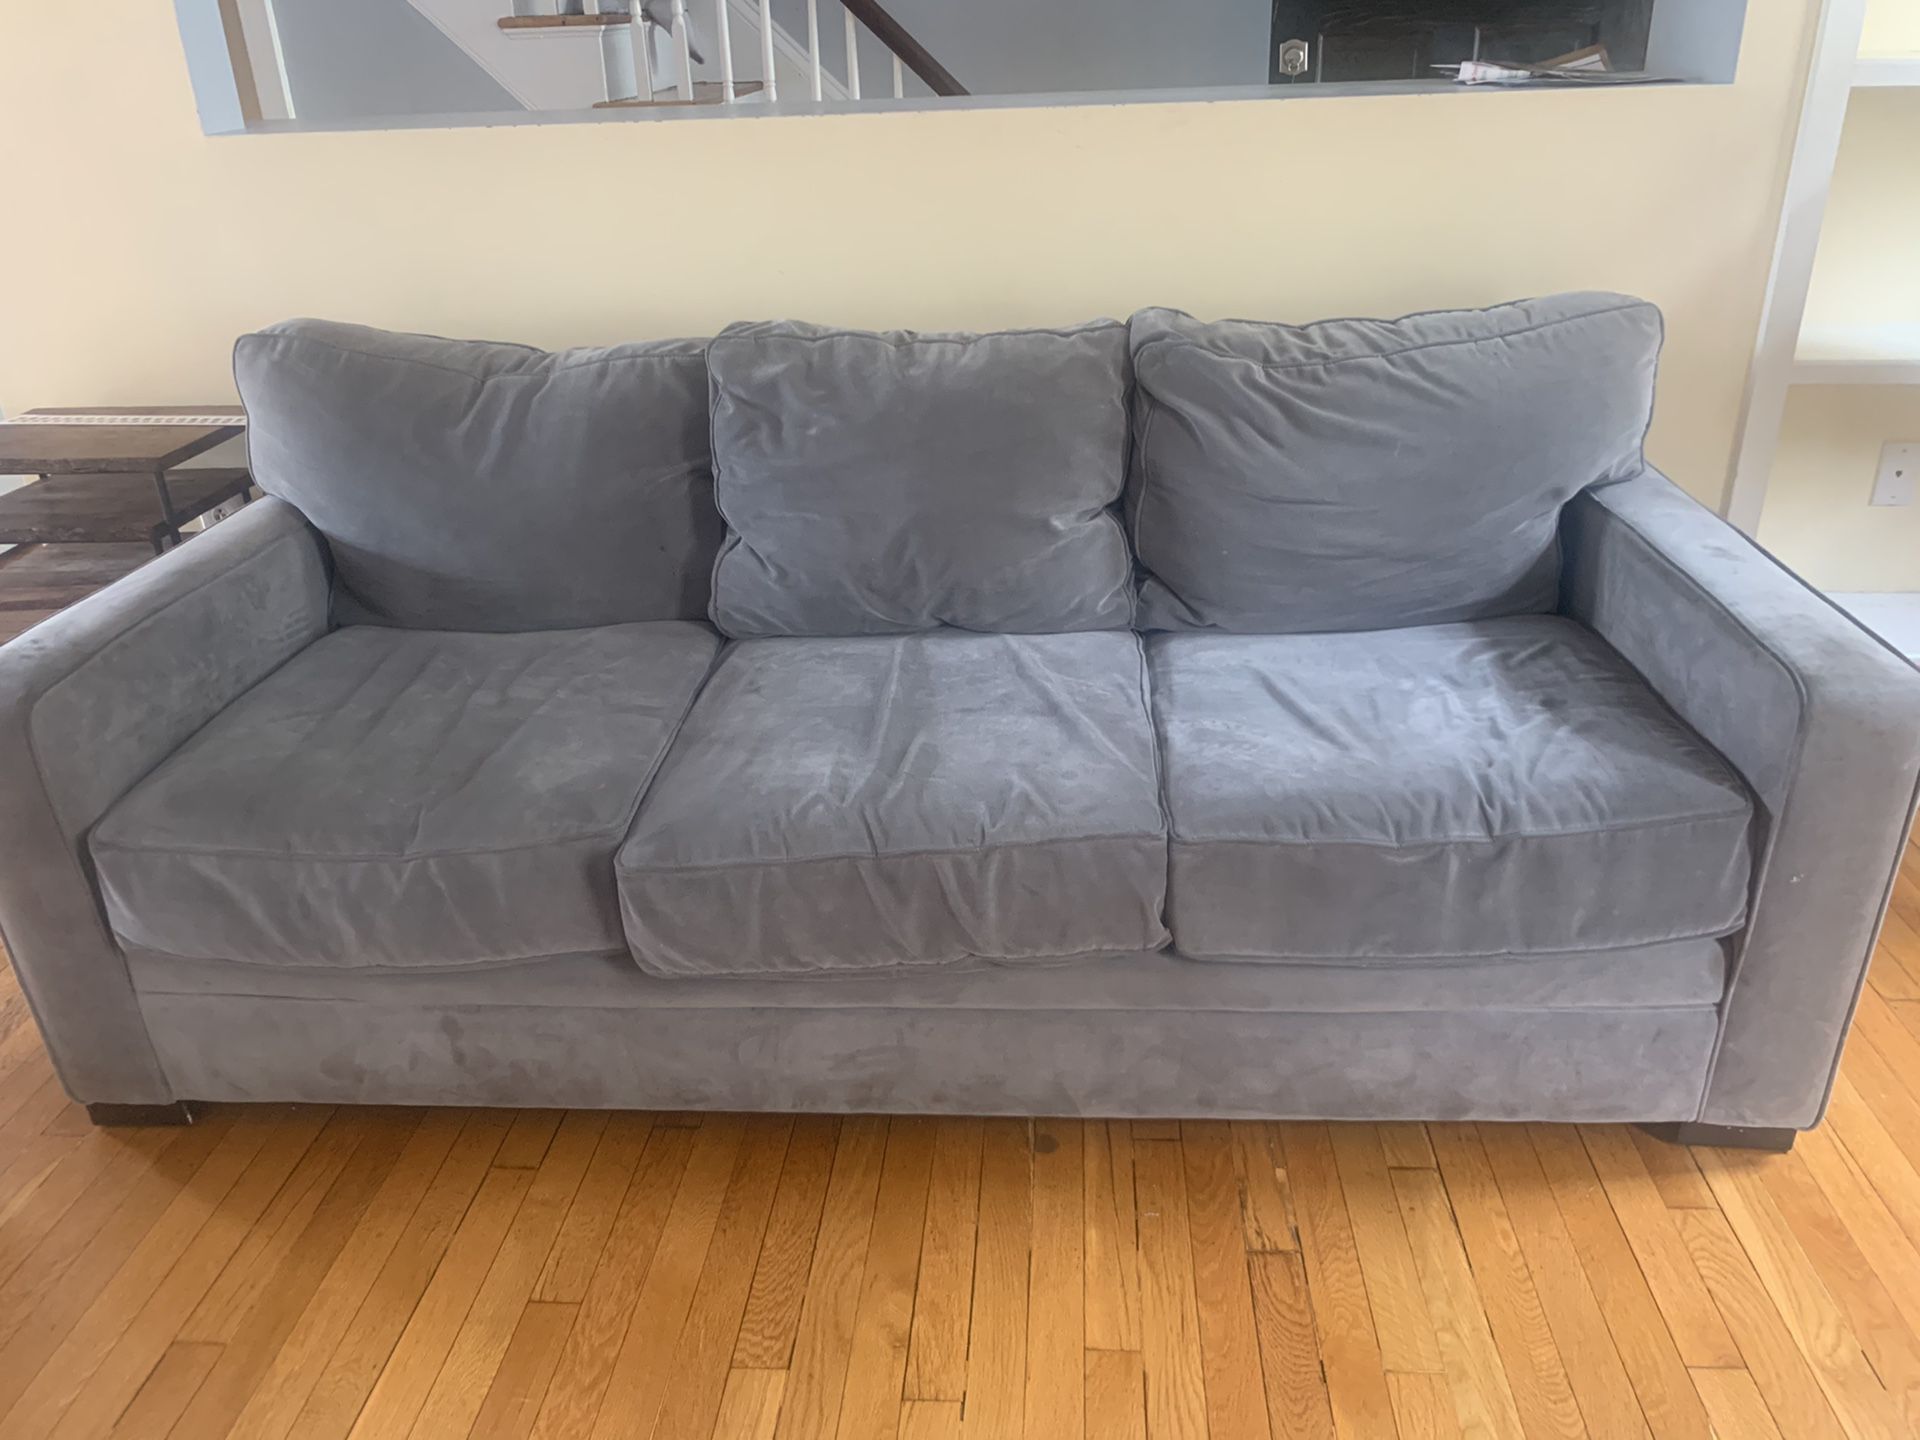 FREE Must pick up FRI / SAT in Charlestown —- Jordan’s grey microfiber couch